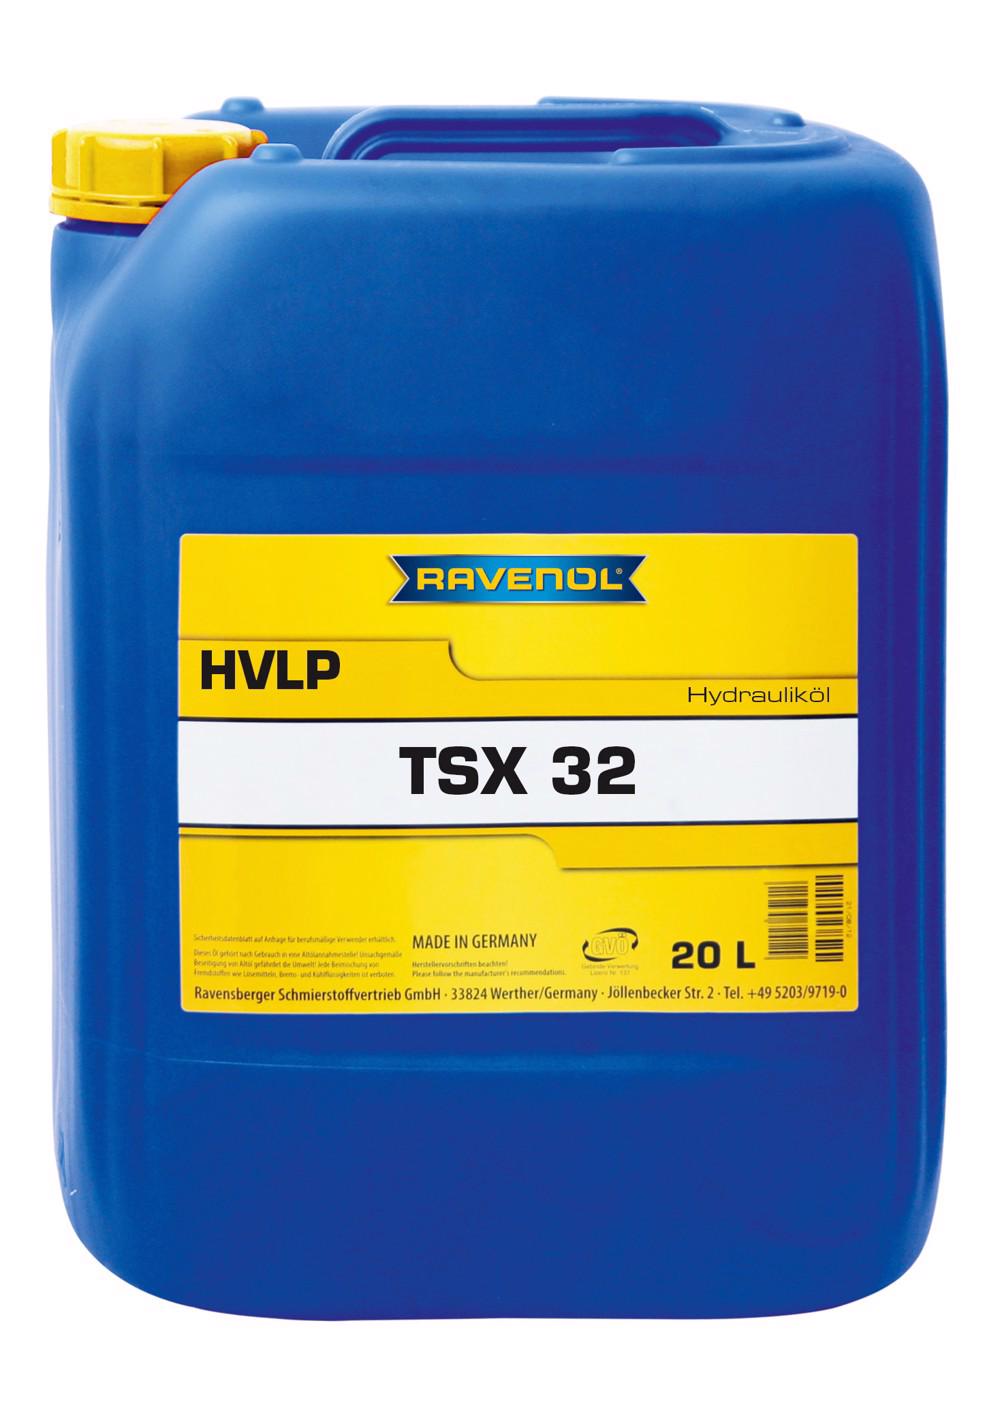 RAVENOL Hydraulikoel TSX 32 (HVLP)  20 L